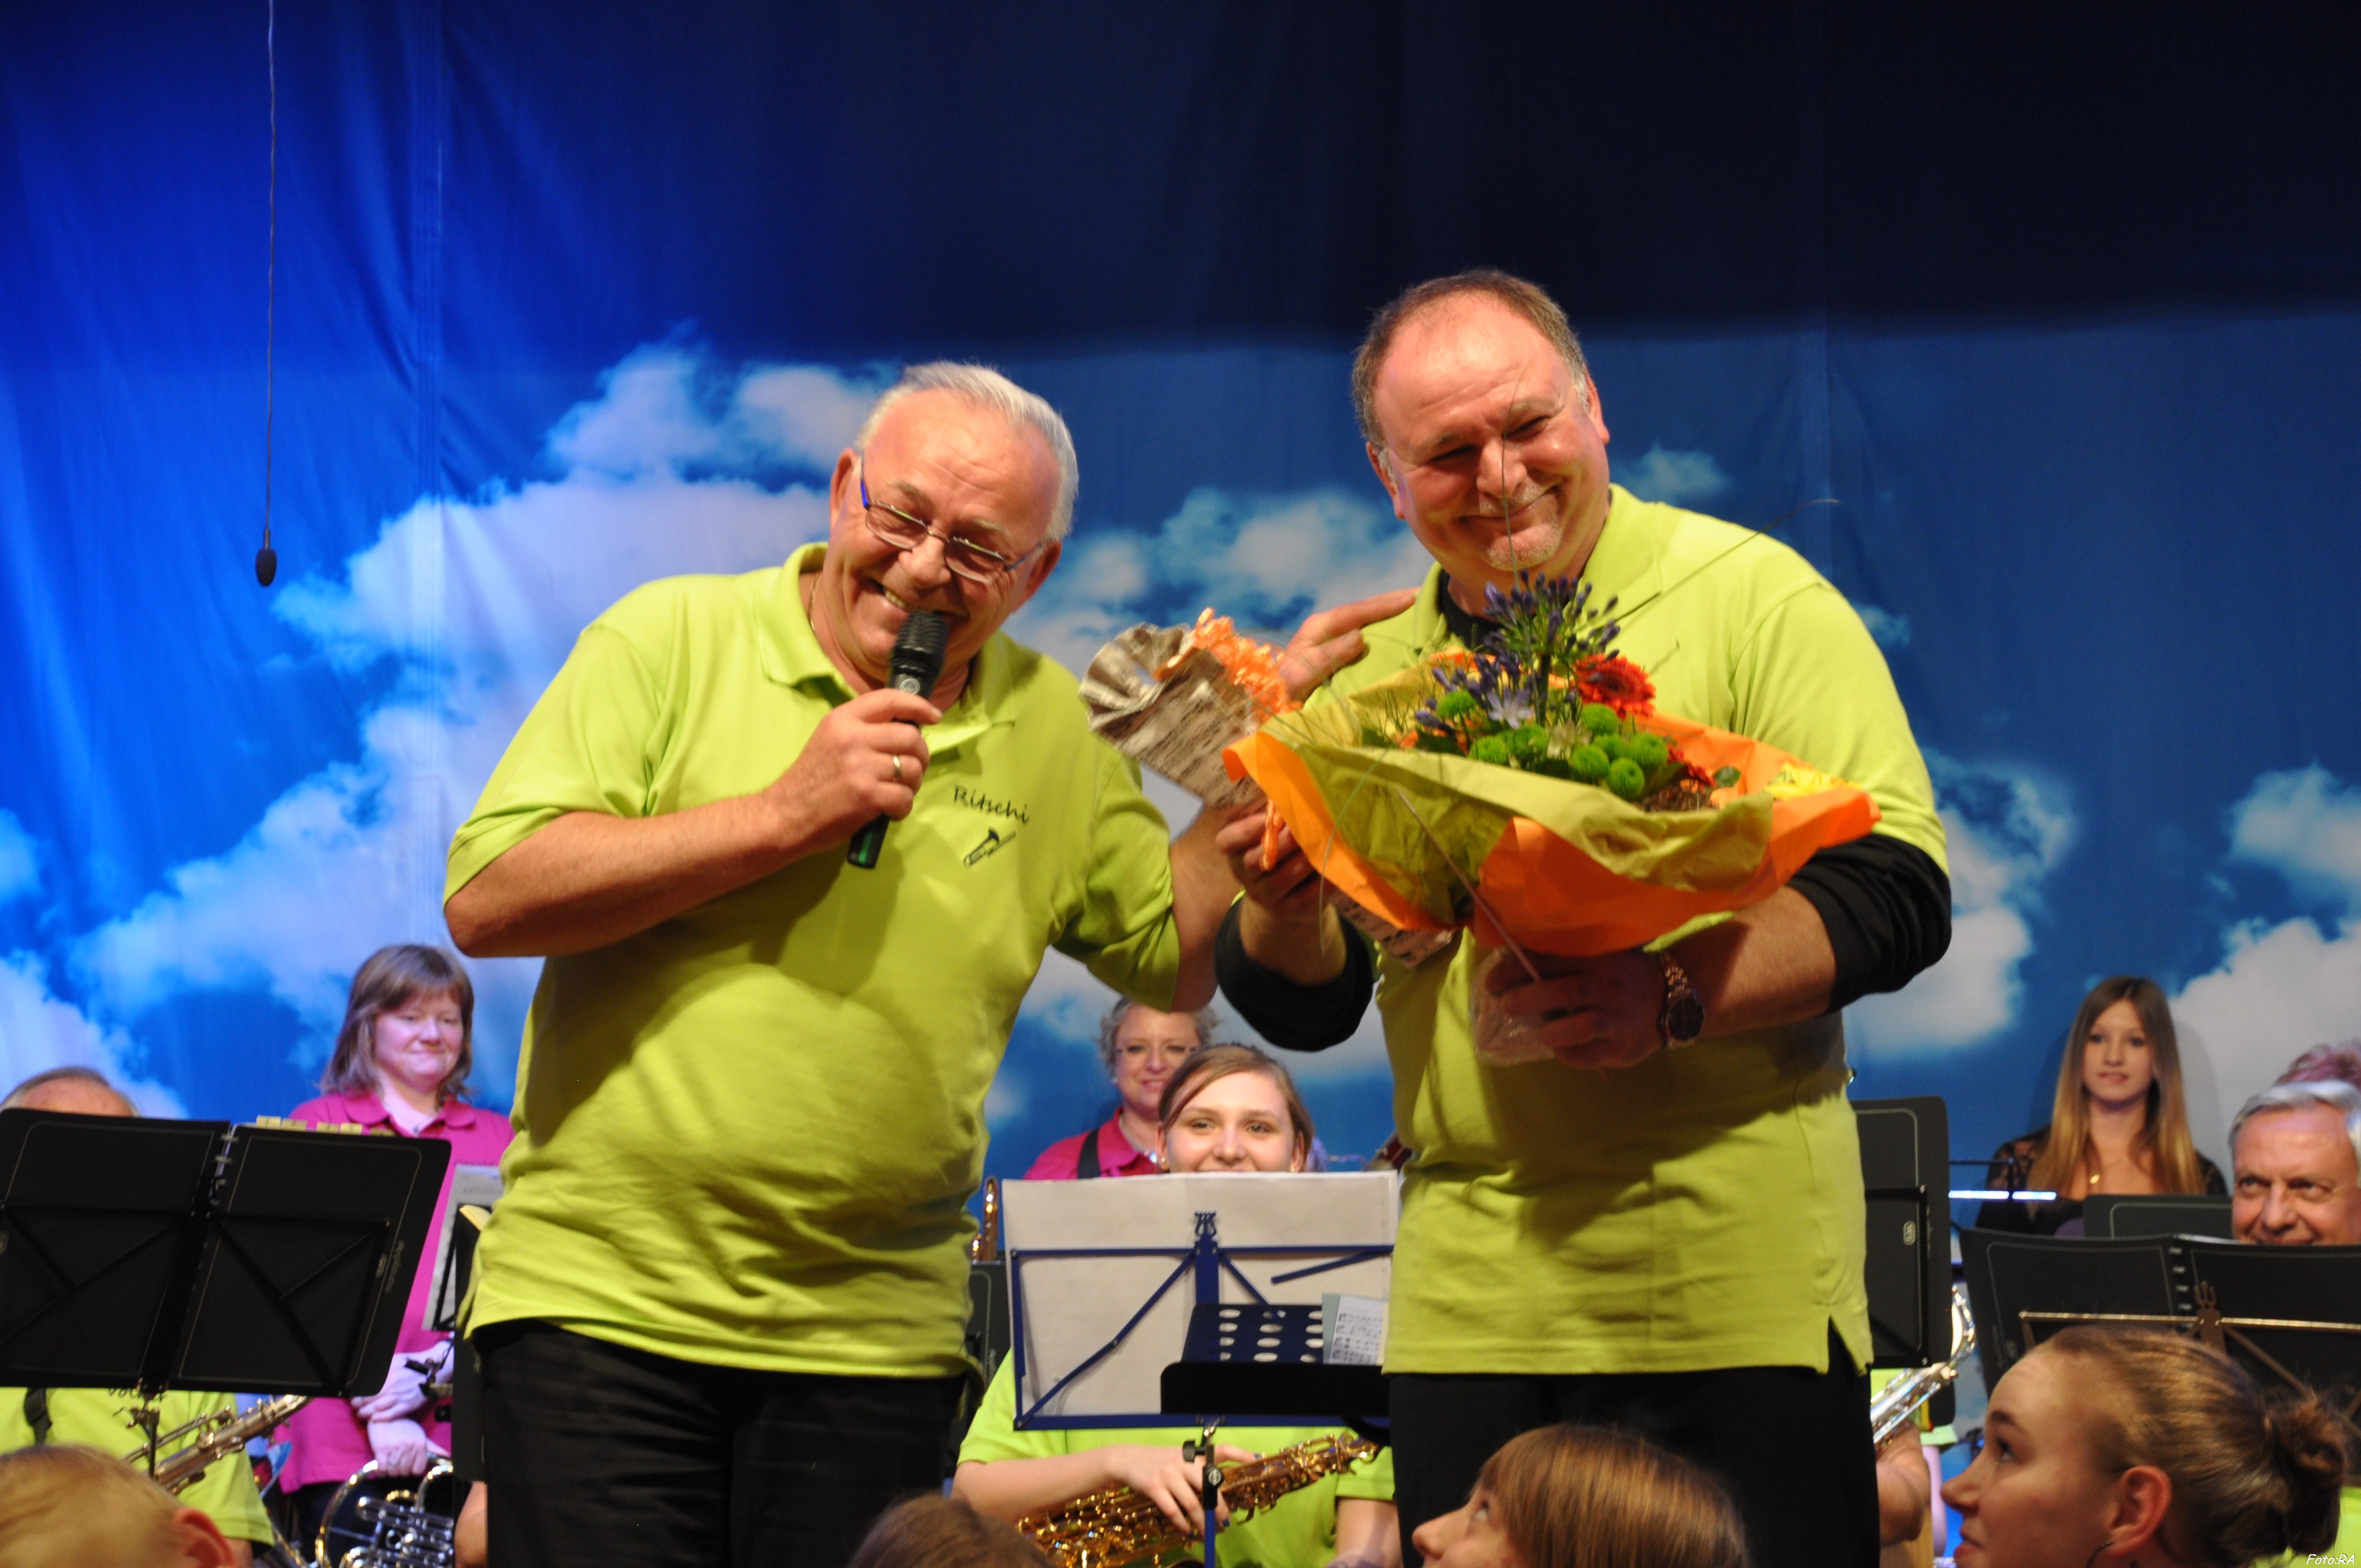 Ritschi Herrman und Bernd Jörka beim Maikonzert (2013)